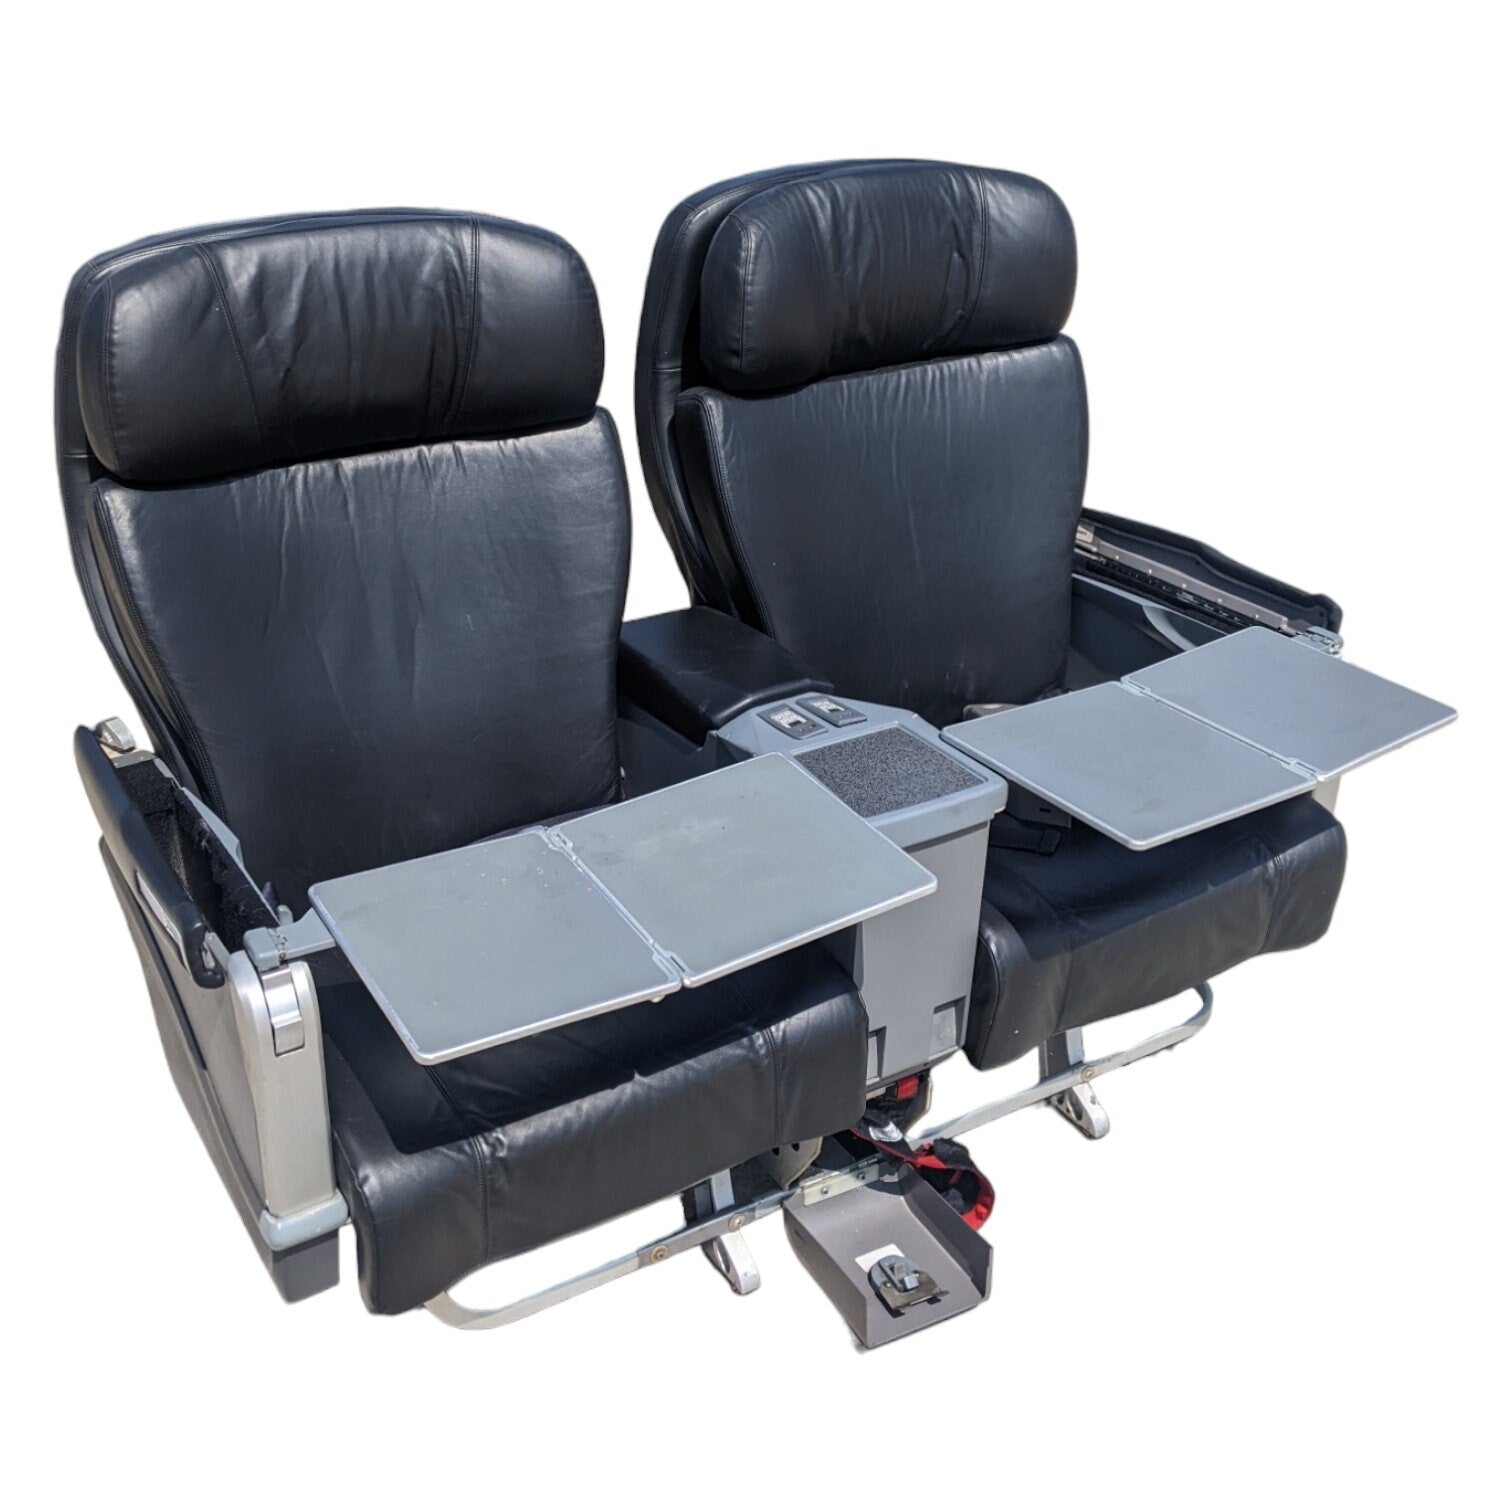 Boeing 737 Original Airlines Business Class Seats Aircraft Seats